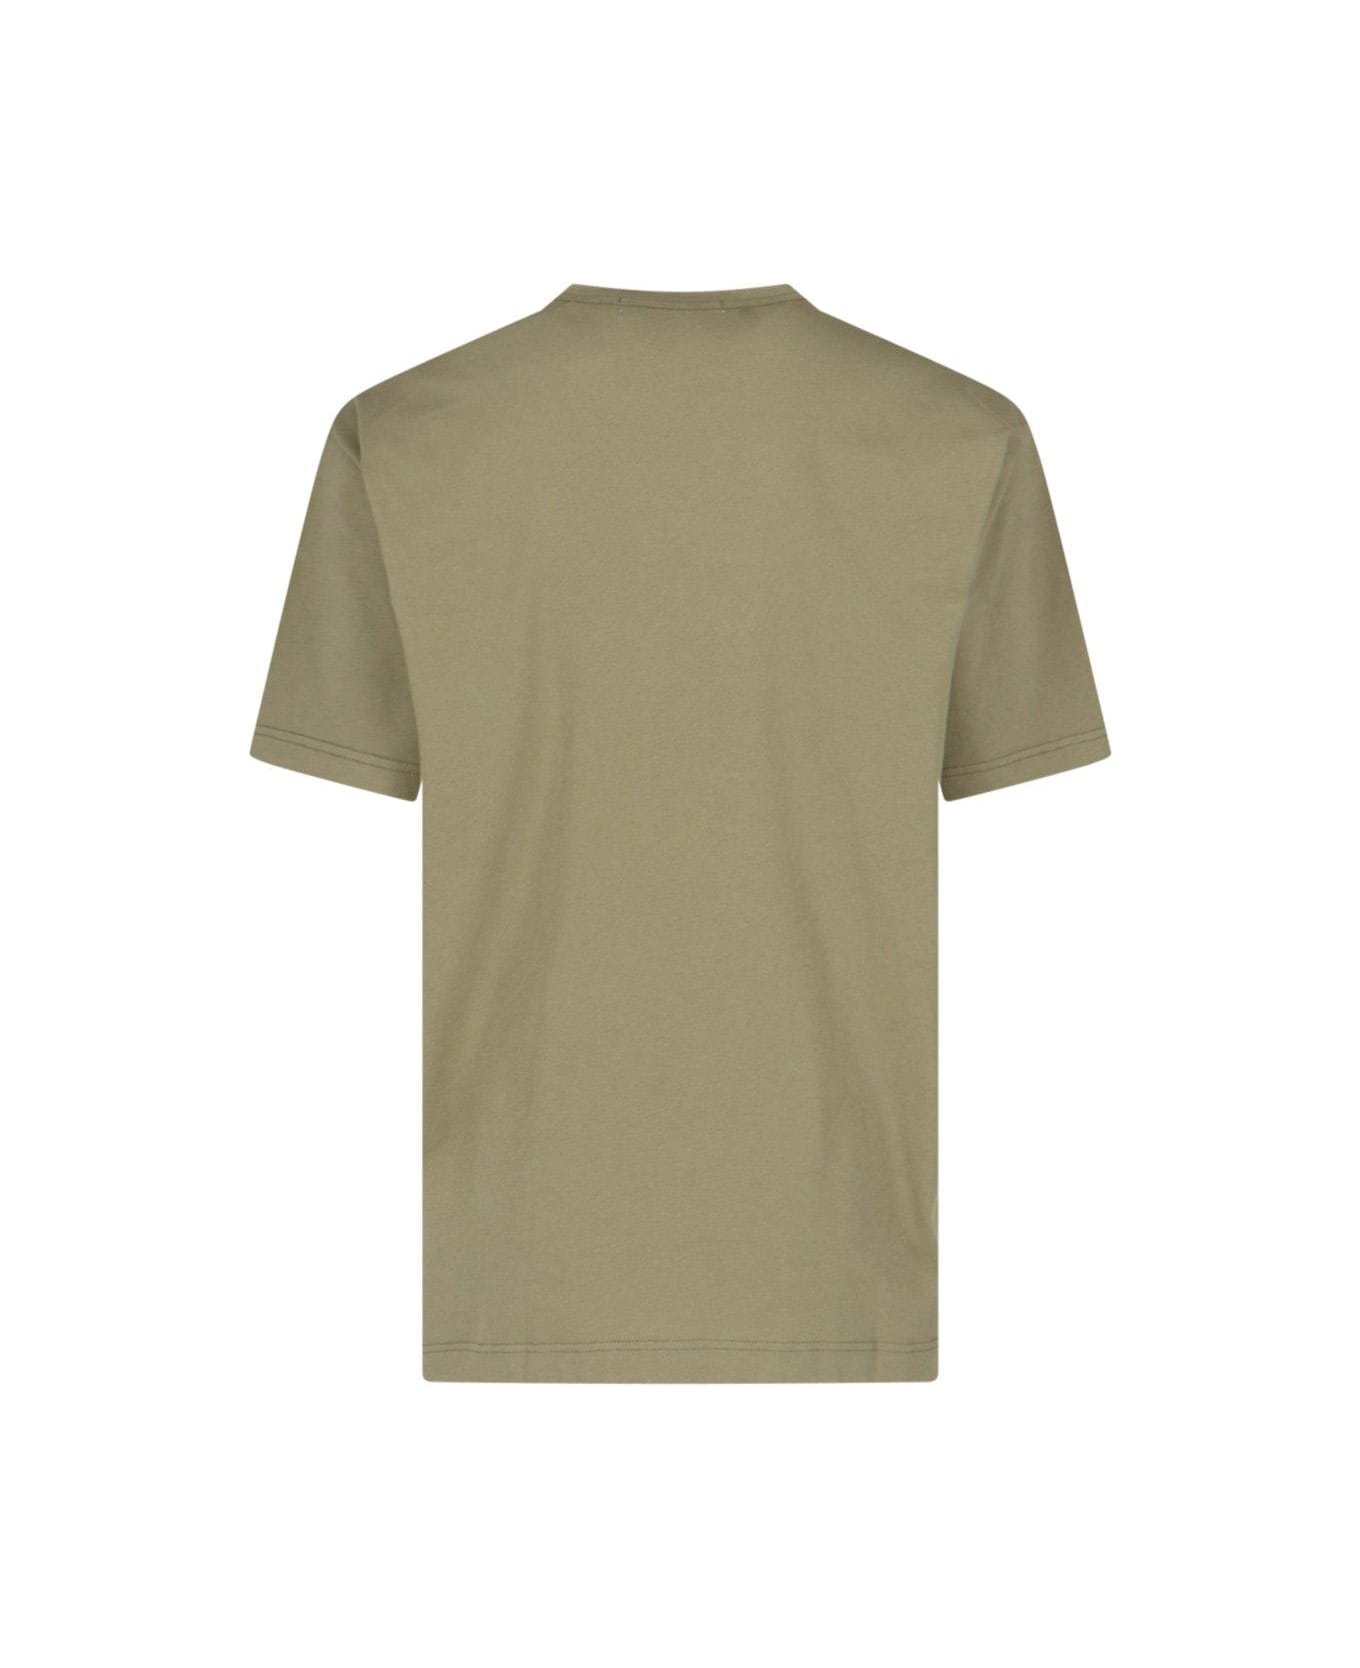 Comme des Garçons Shirt Logo Printed Crewneck T-shirt - Khaki